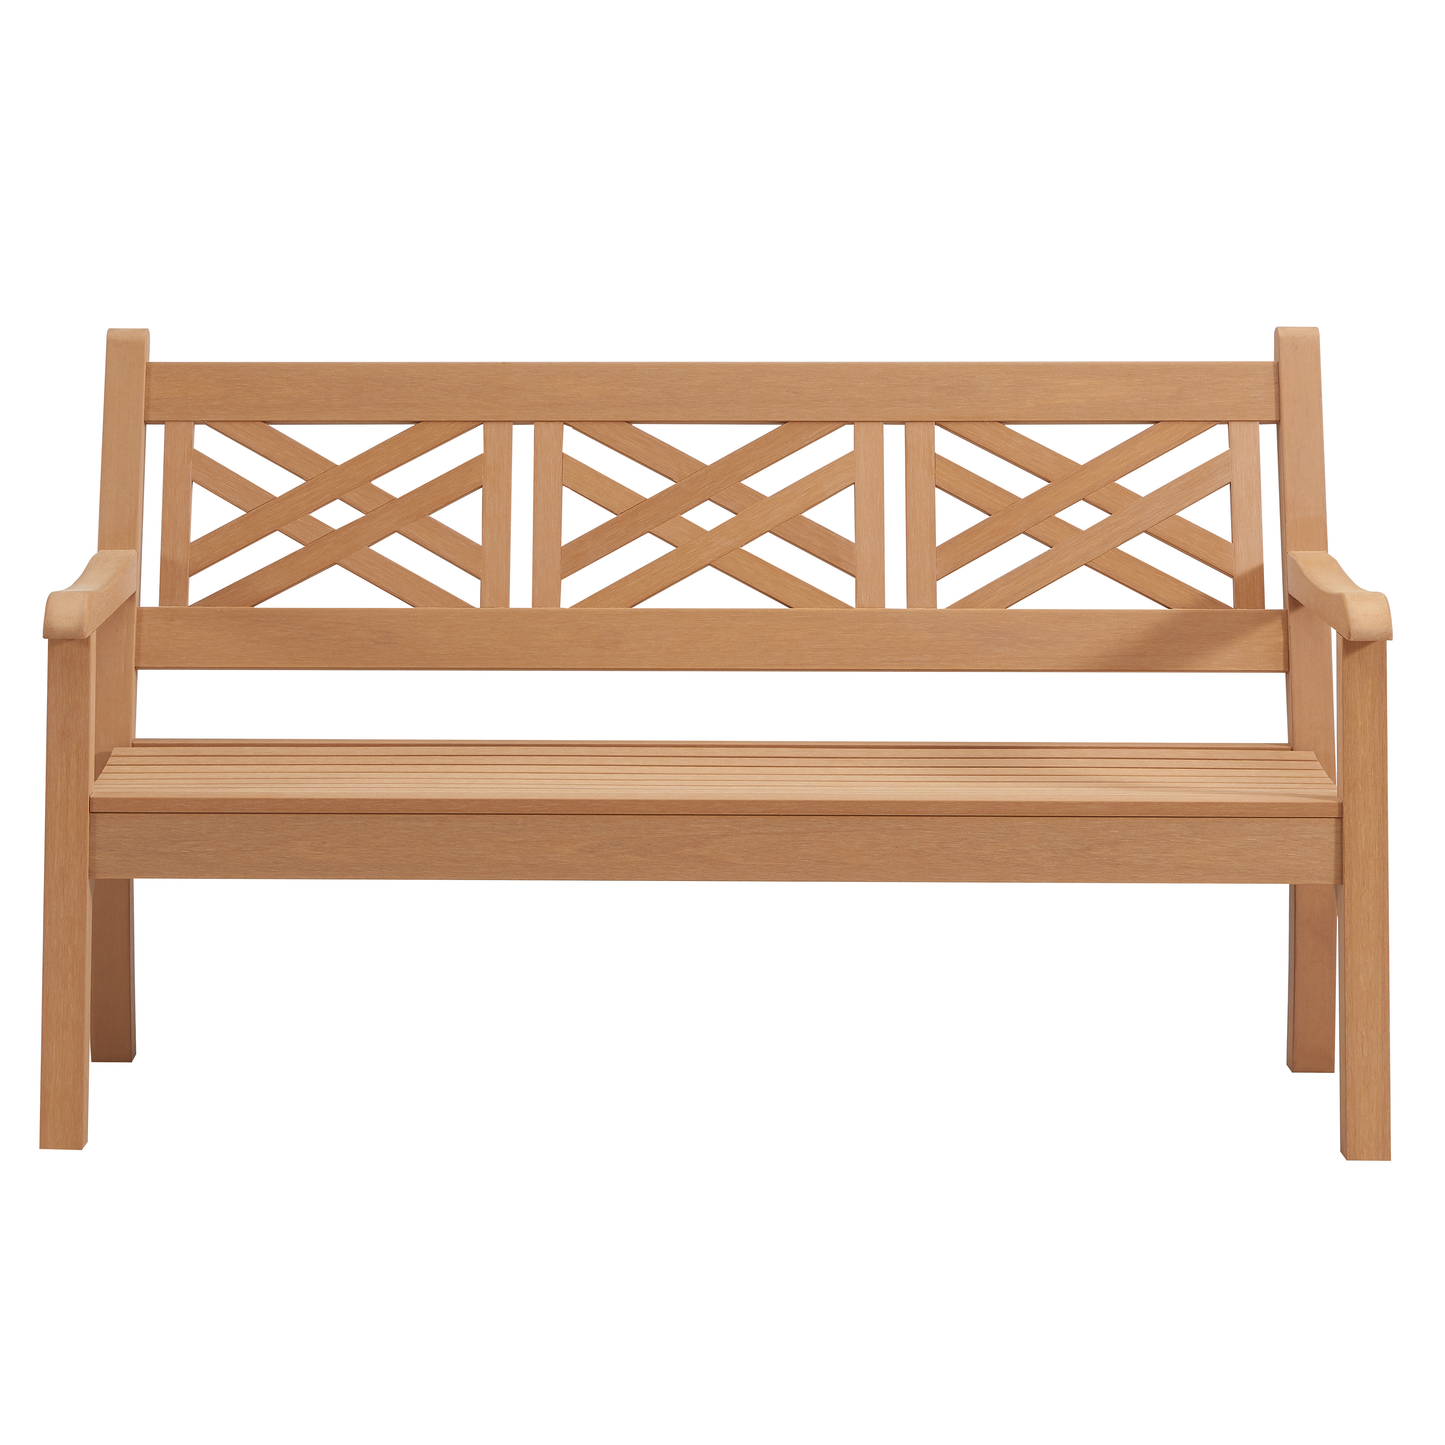 Winawood Speyside 3 Seater Wood Effect Bench - New Teak